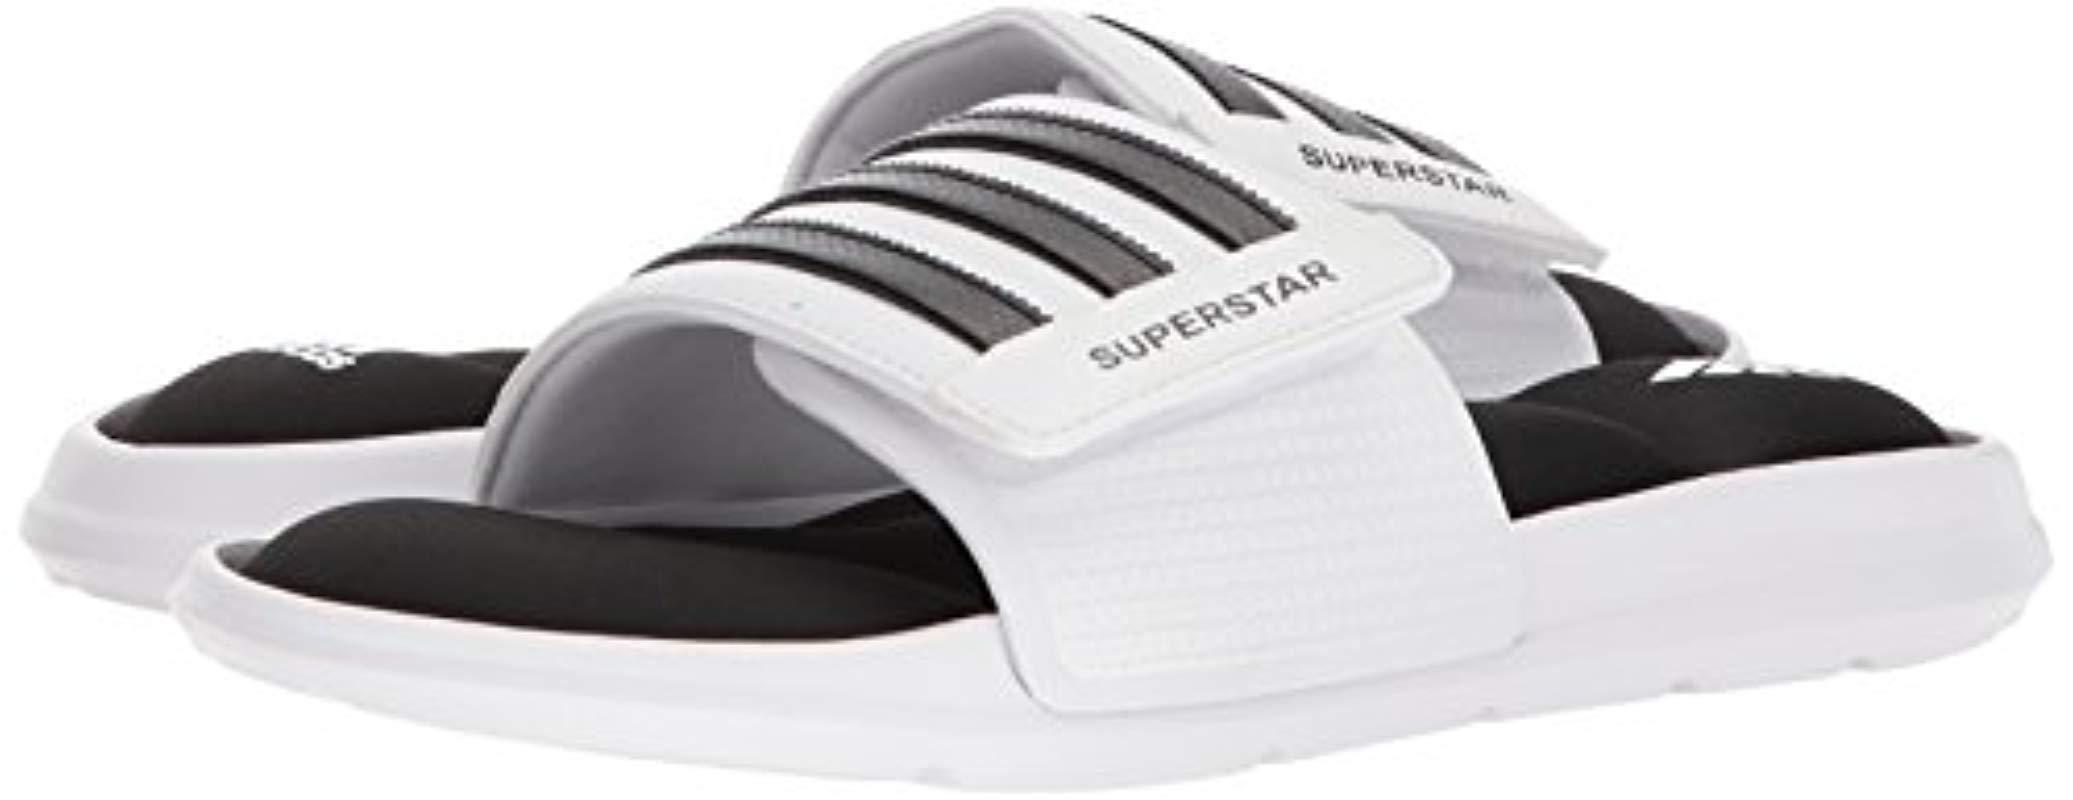 adidas superstar 5g men's slide sandals